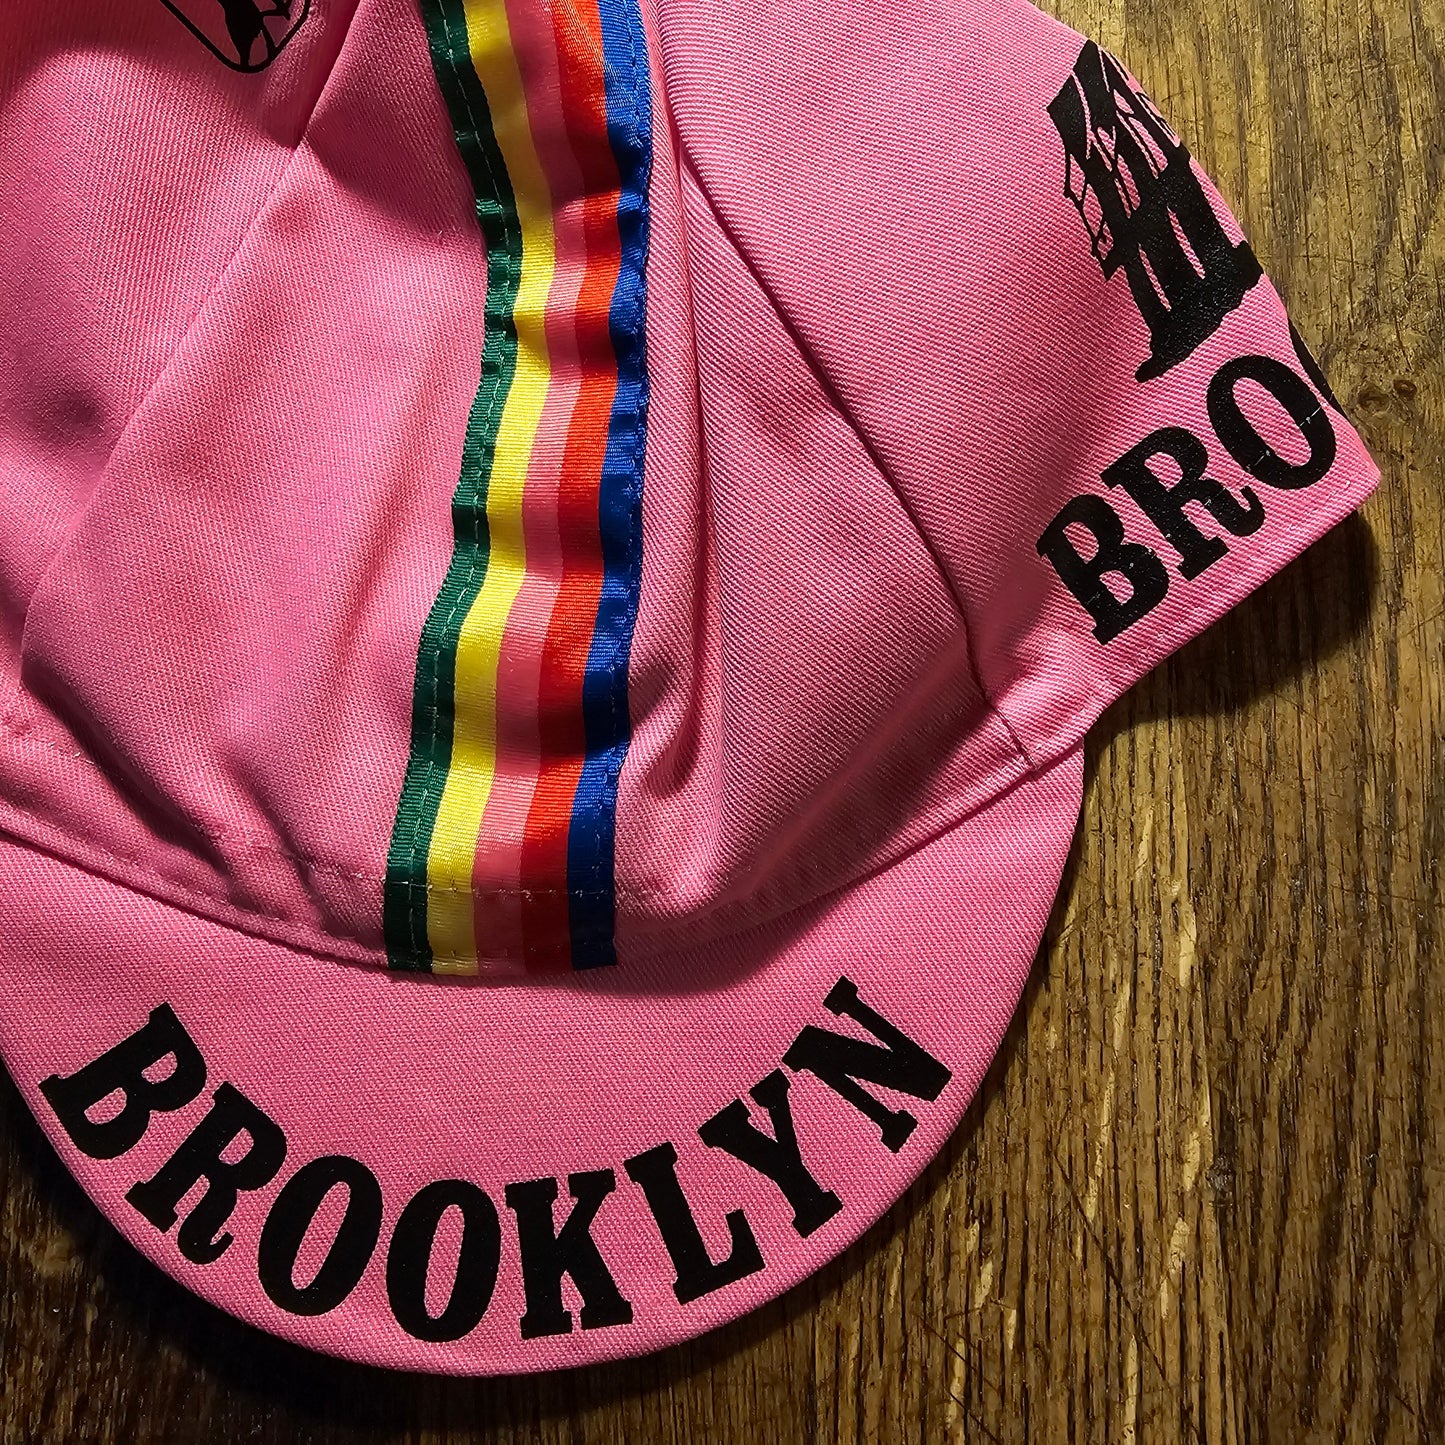 Team Brooklyn Cycling Caps